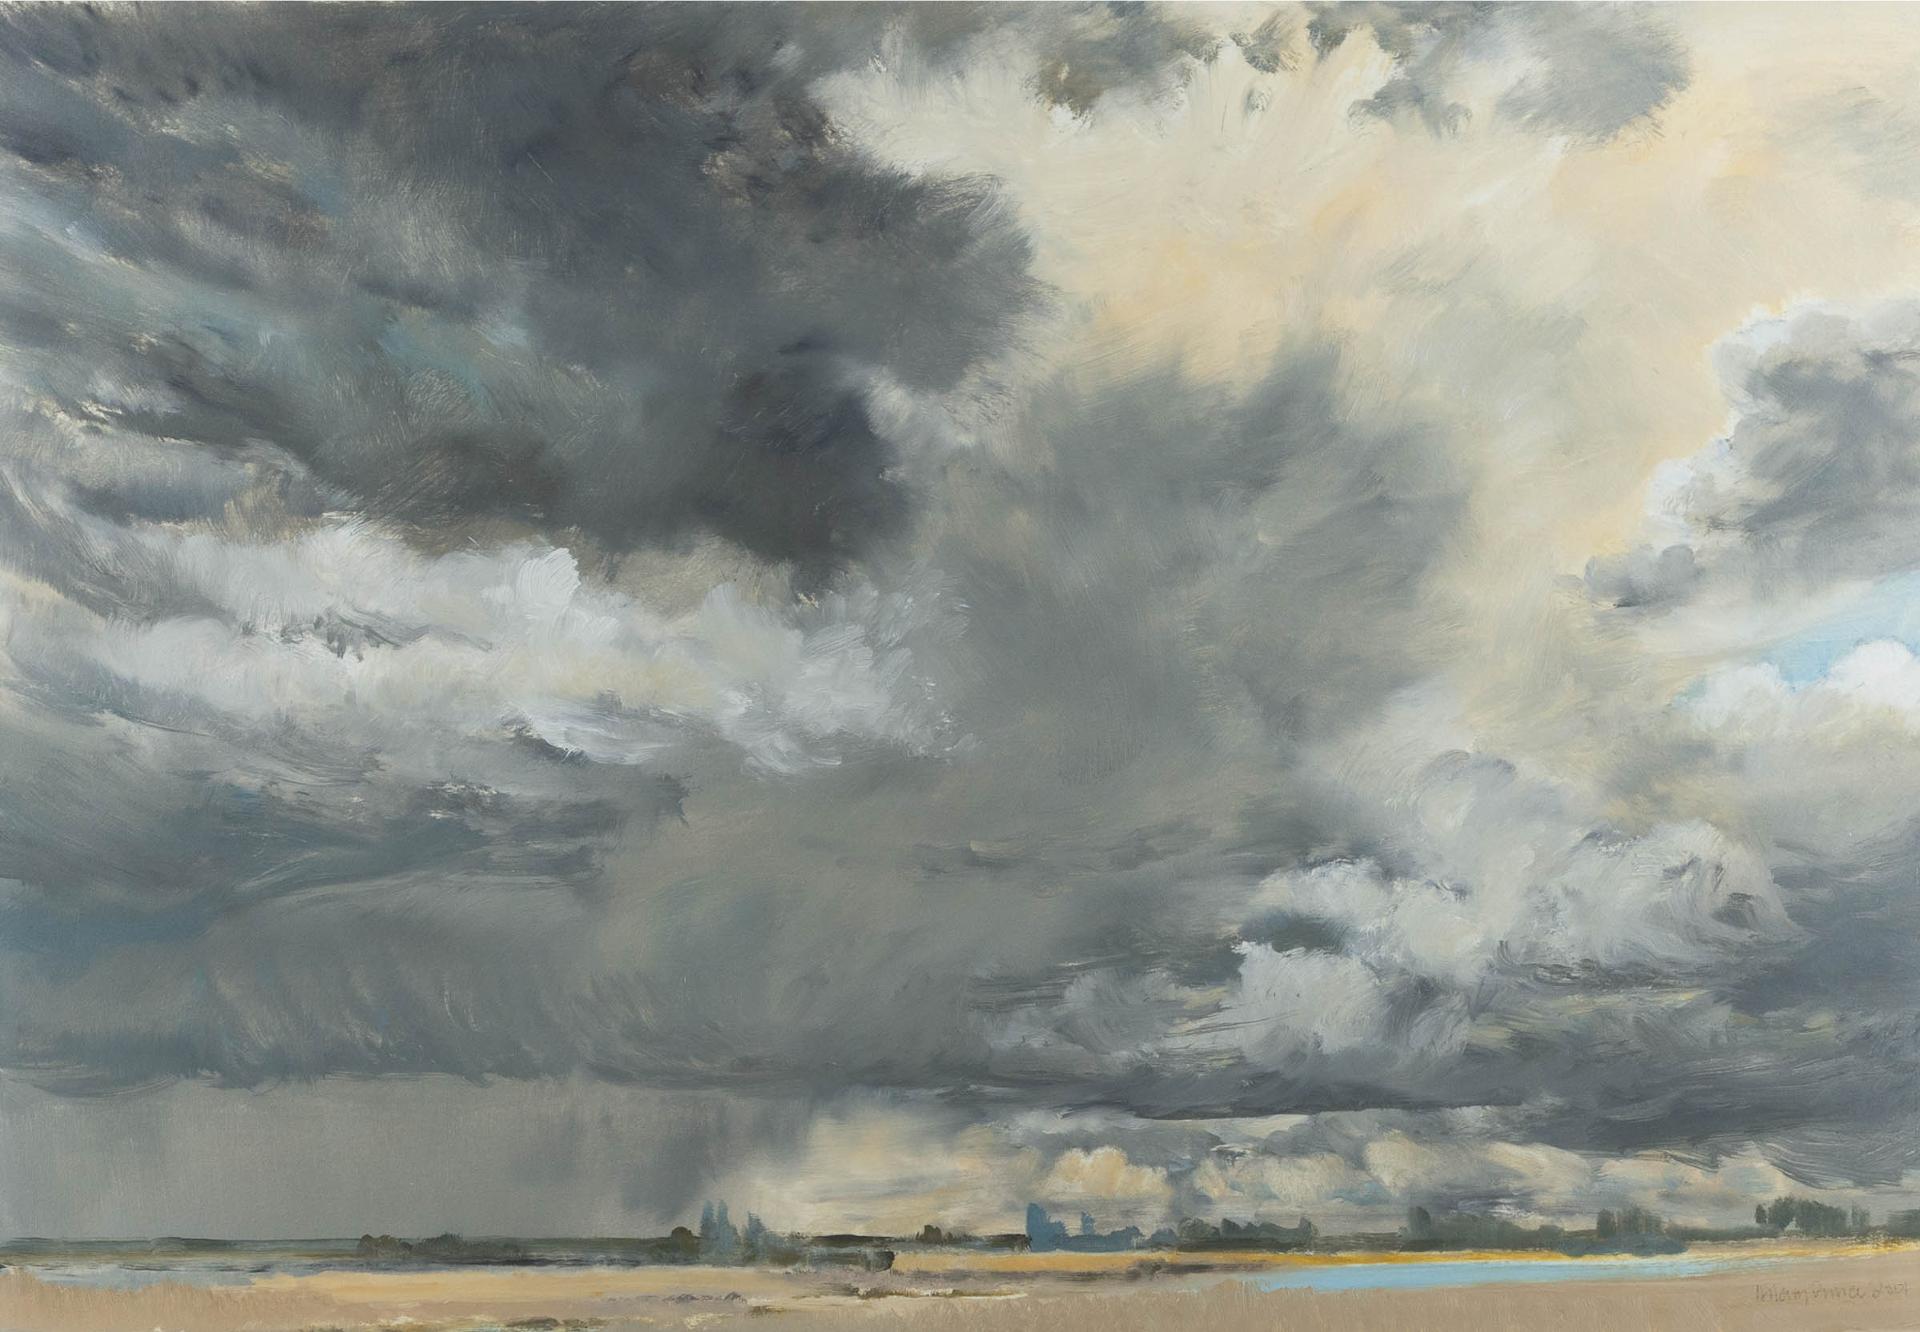 Hilary Prince (1945) - Dark Clouds Over The Farm, 2001